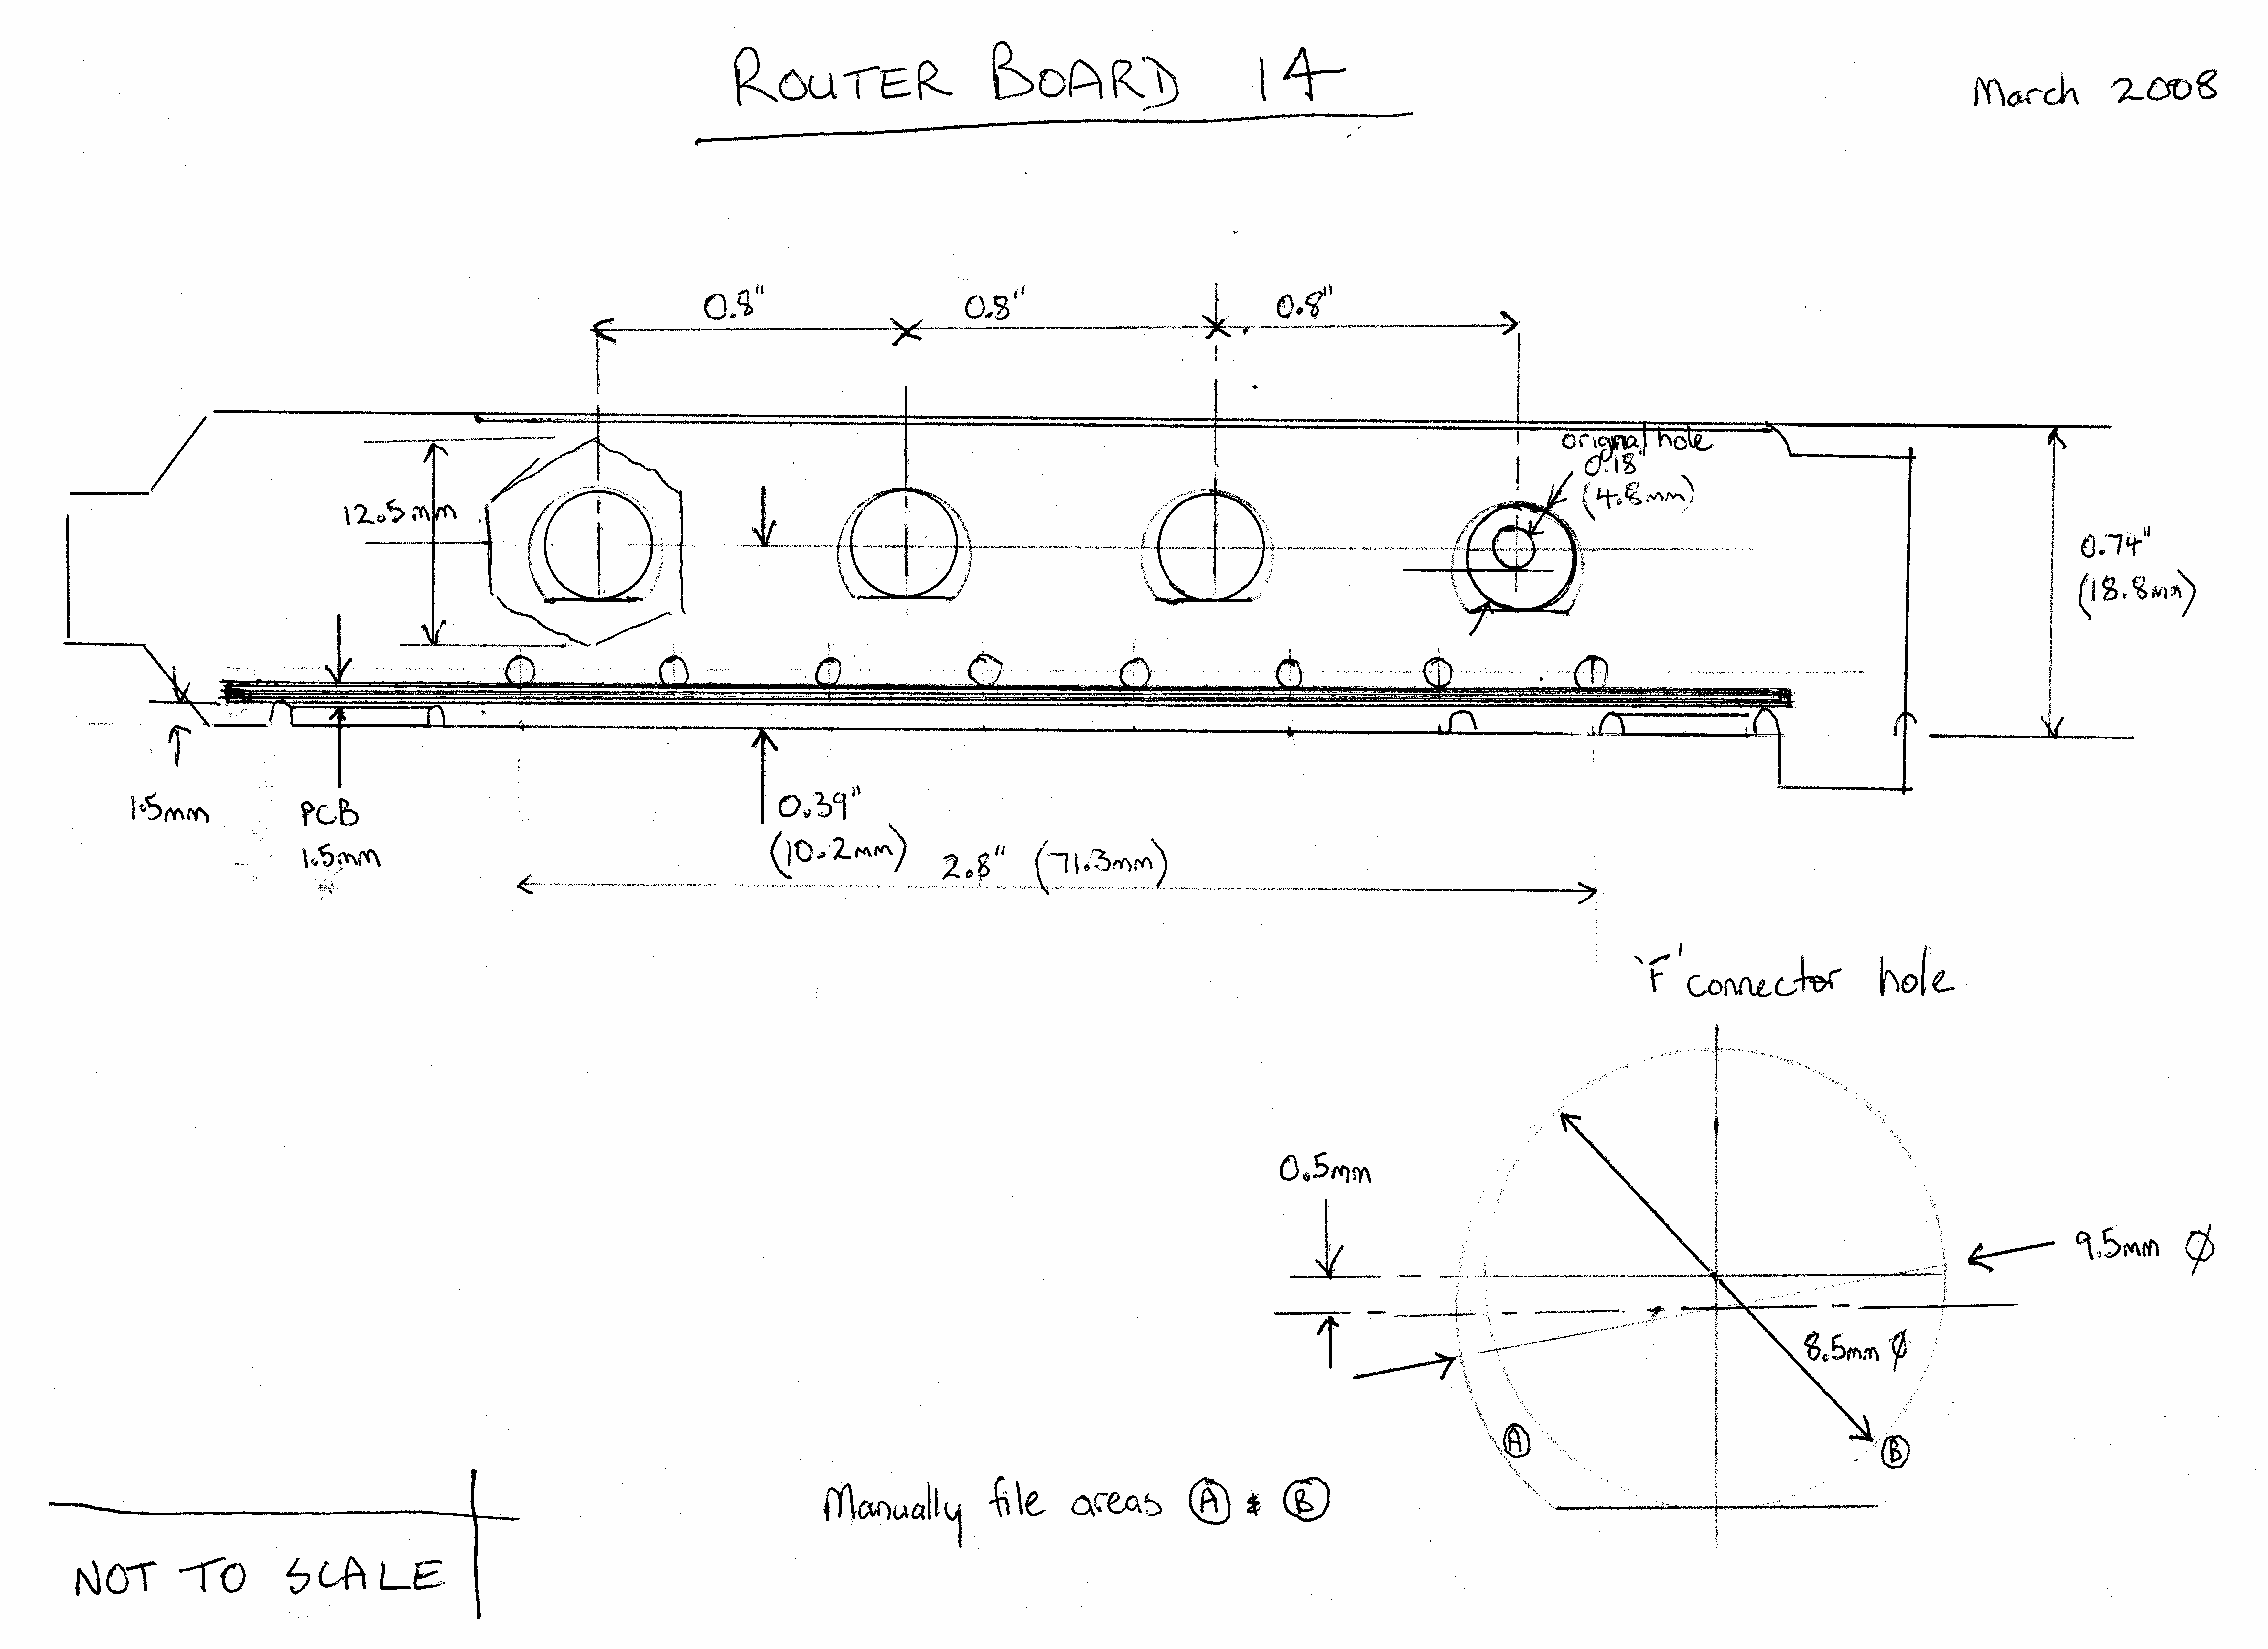 RouterBOARD 14 bracket diagram